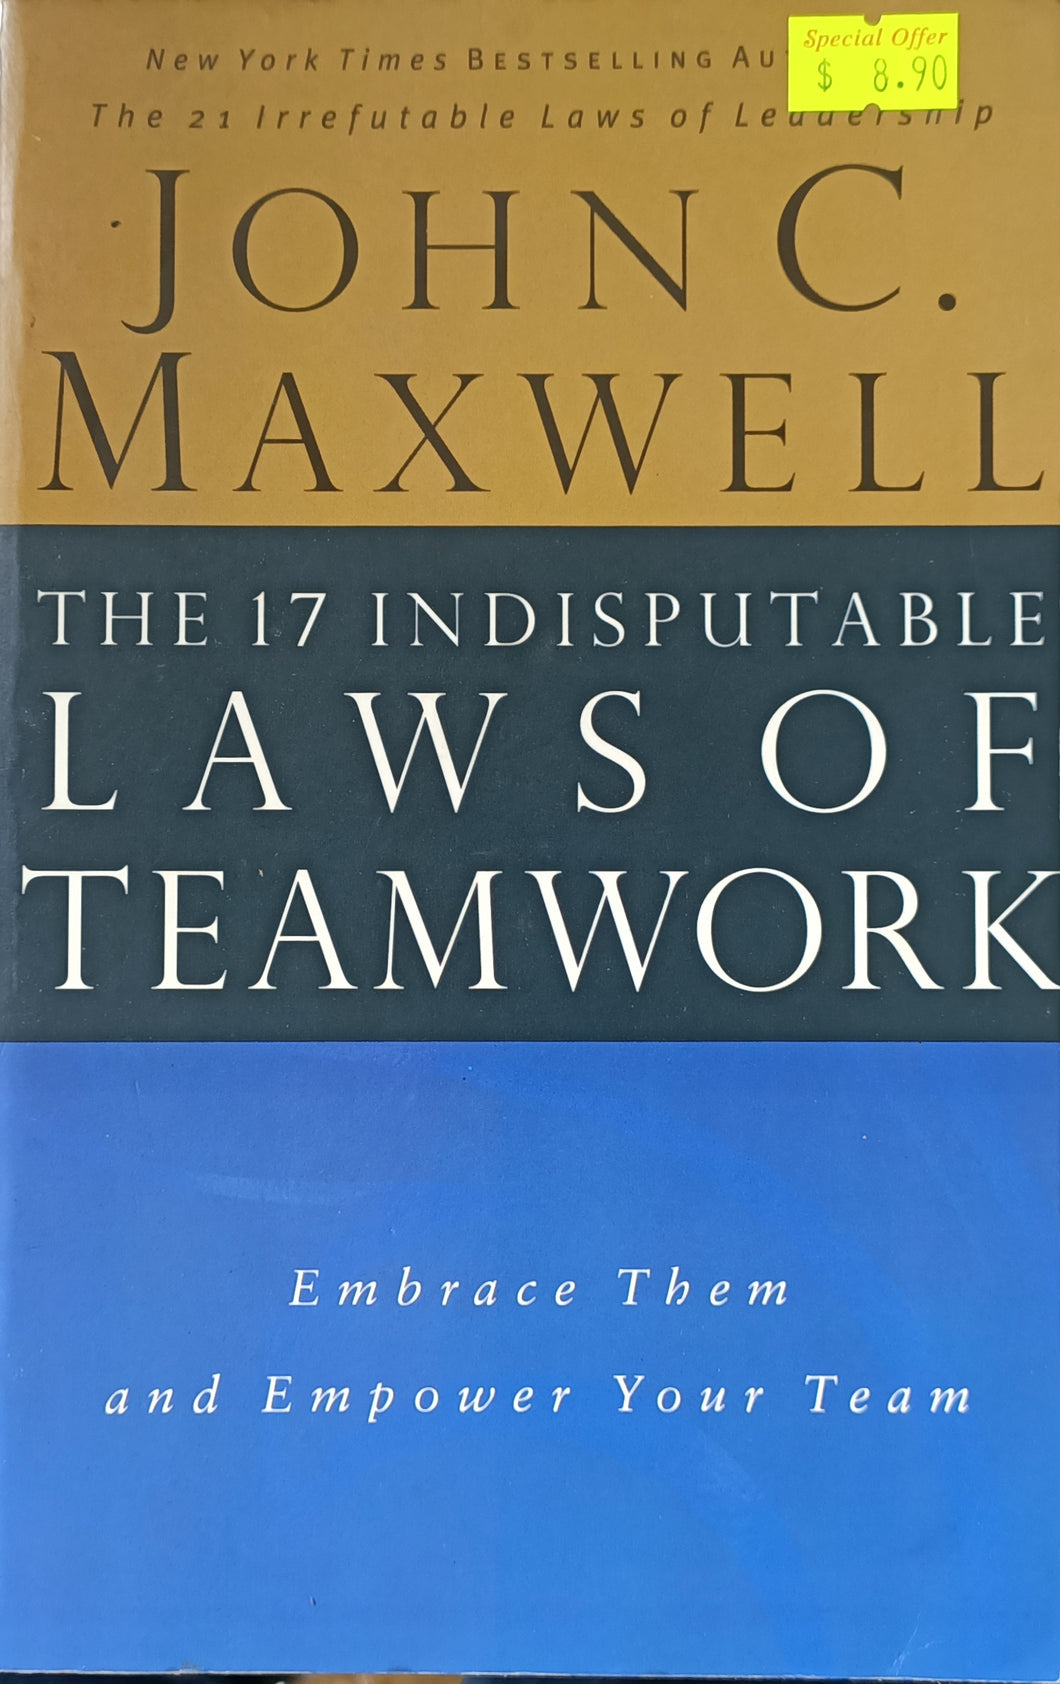 The 17 Indisputable Laws of Teamwork - John C. Maxwell